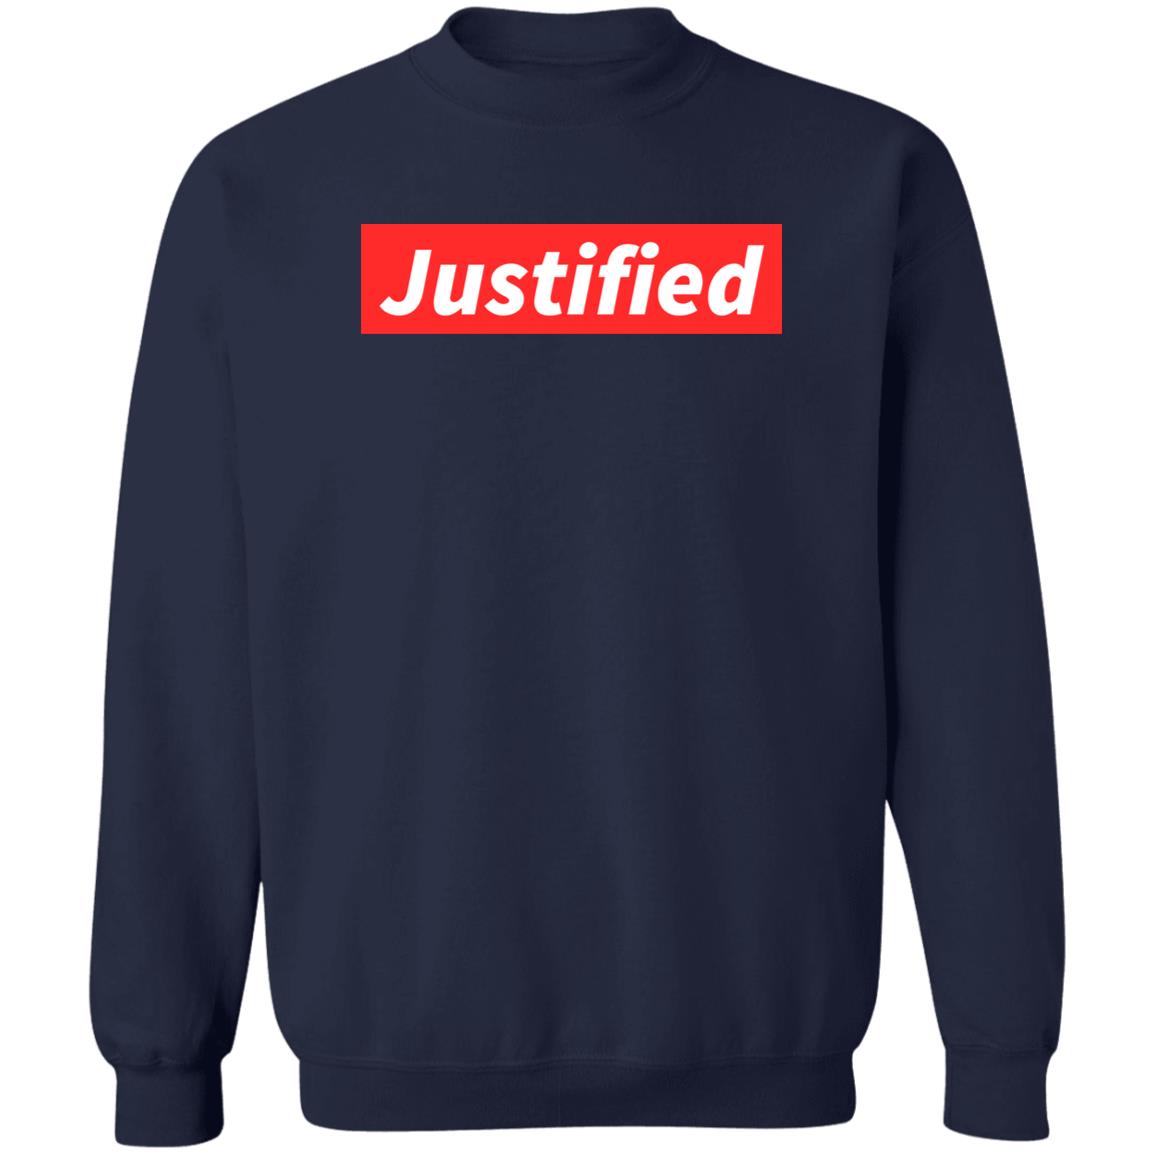 Justified (Unisex Sweatshirt)